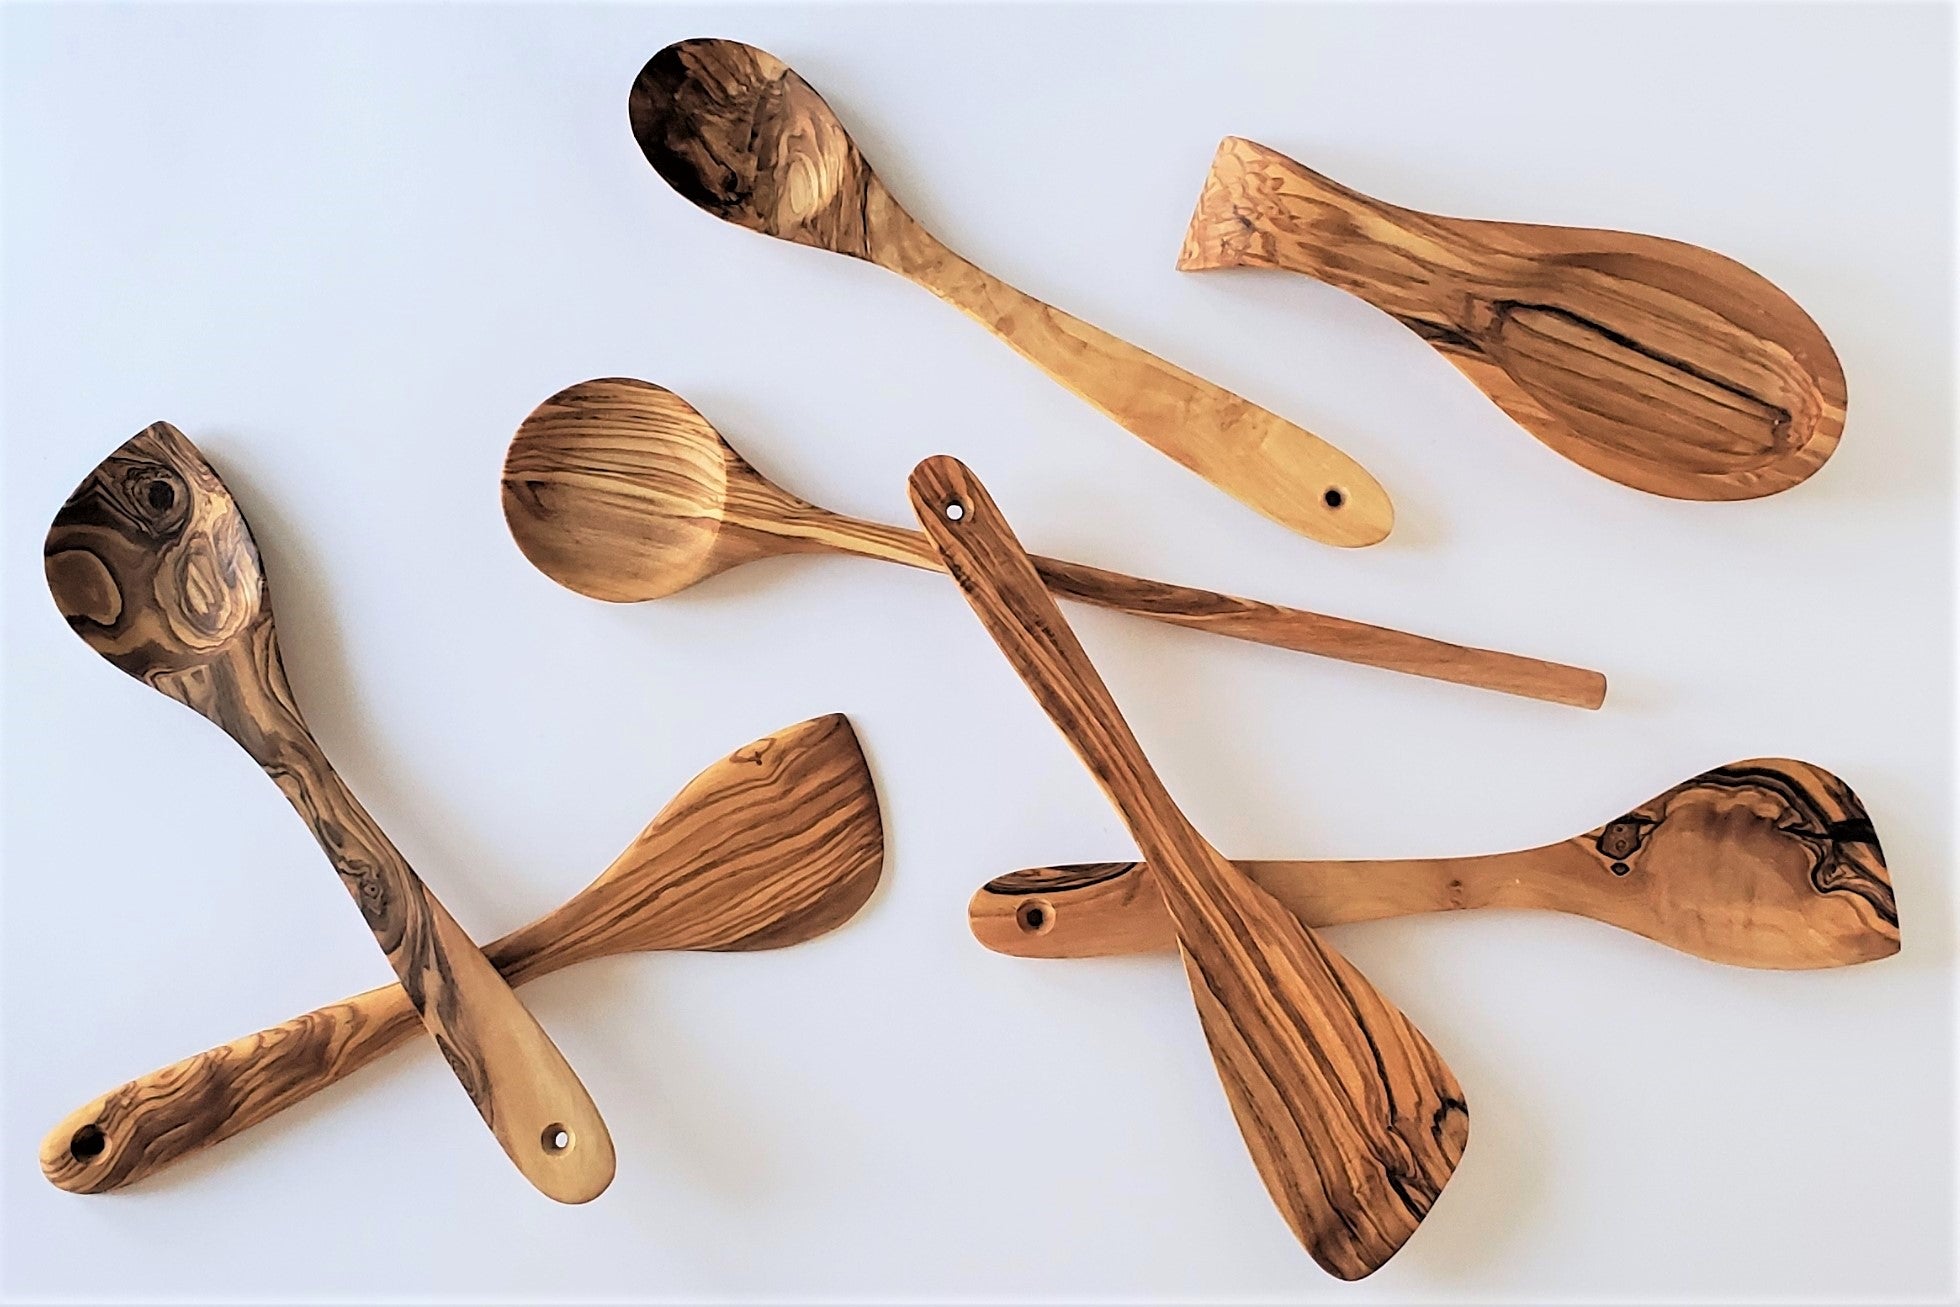 Olive Wood Utensil Set, Wooden Utensils for Cooking, Kitchen